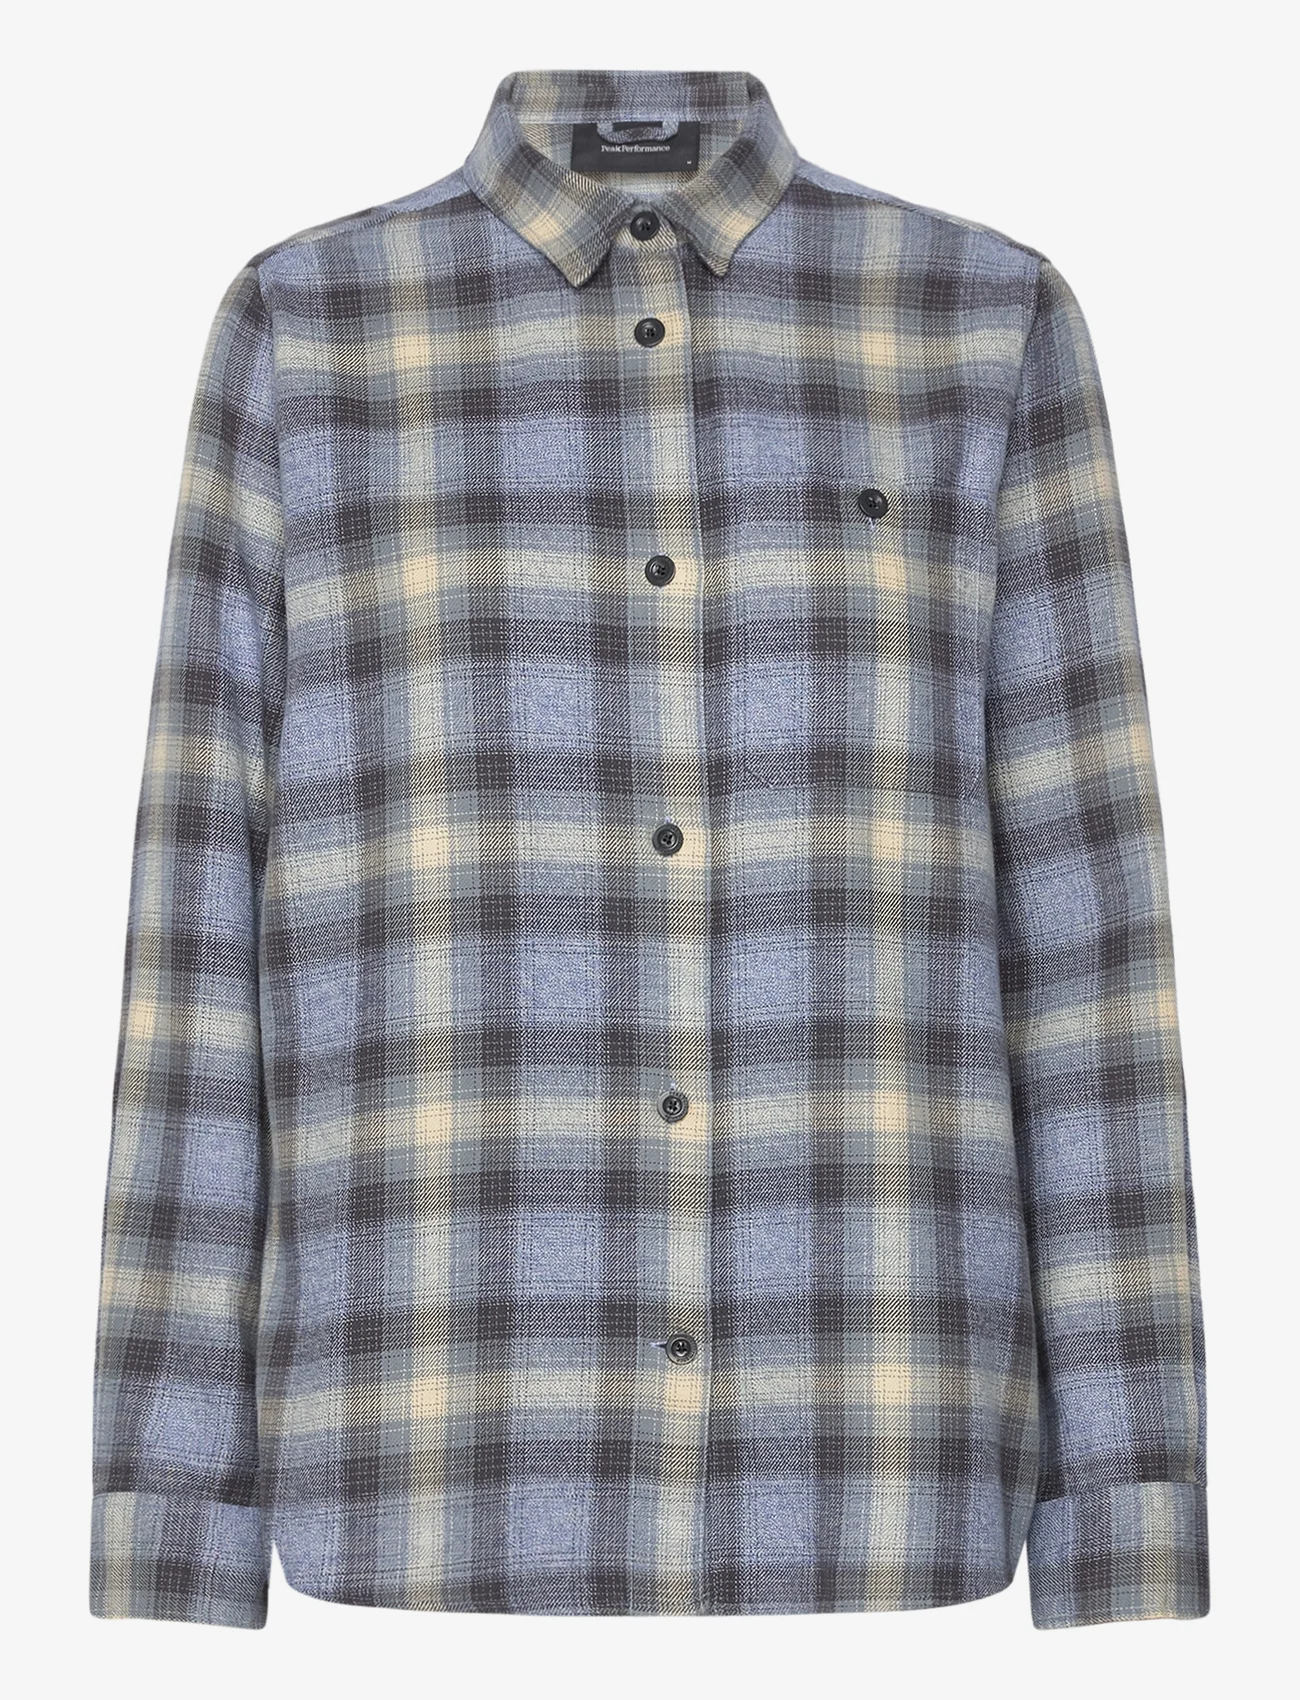 Peak Performance - W Cotton Flannel Shirt-142 CHECK - marškiniai ilgomis rankovėmis - 142 check - 0